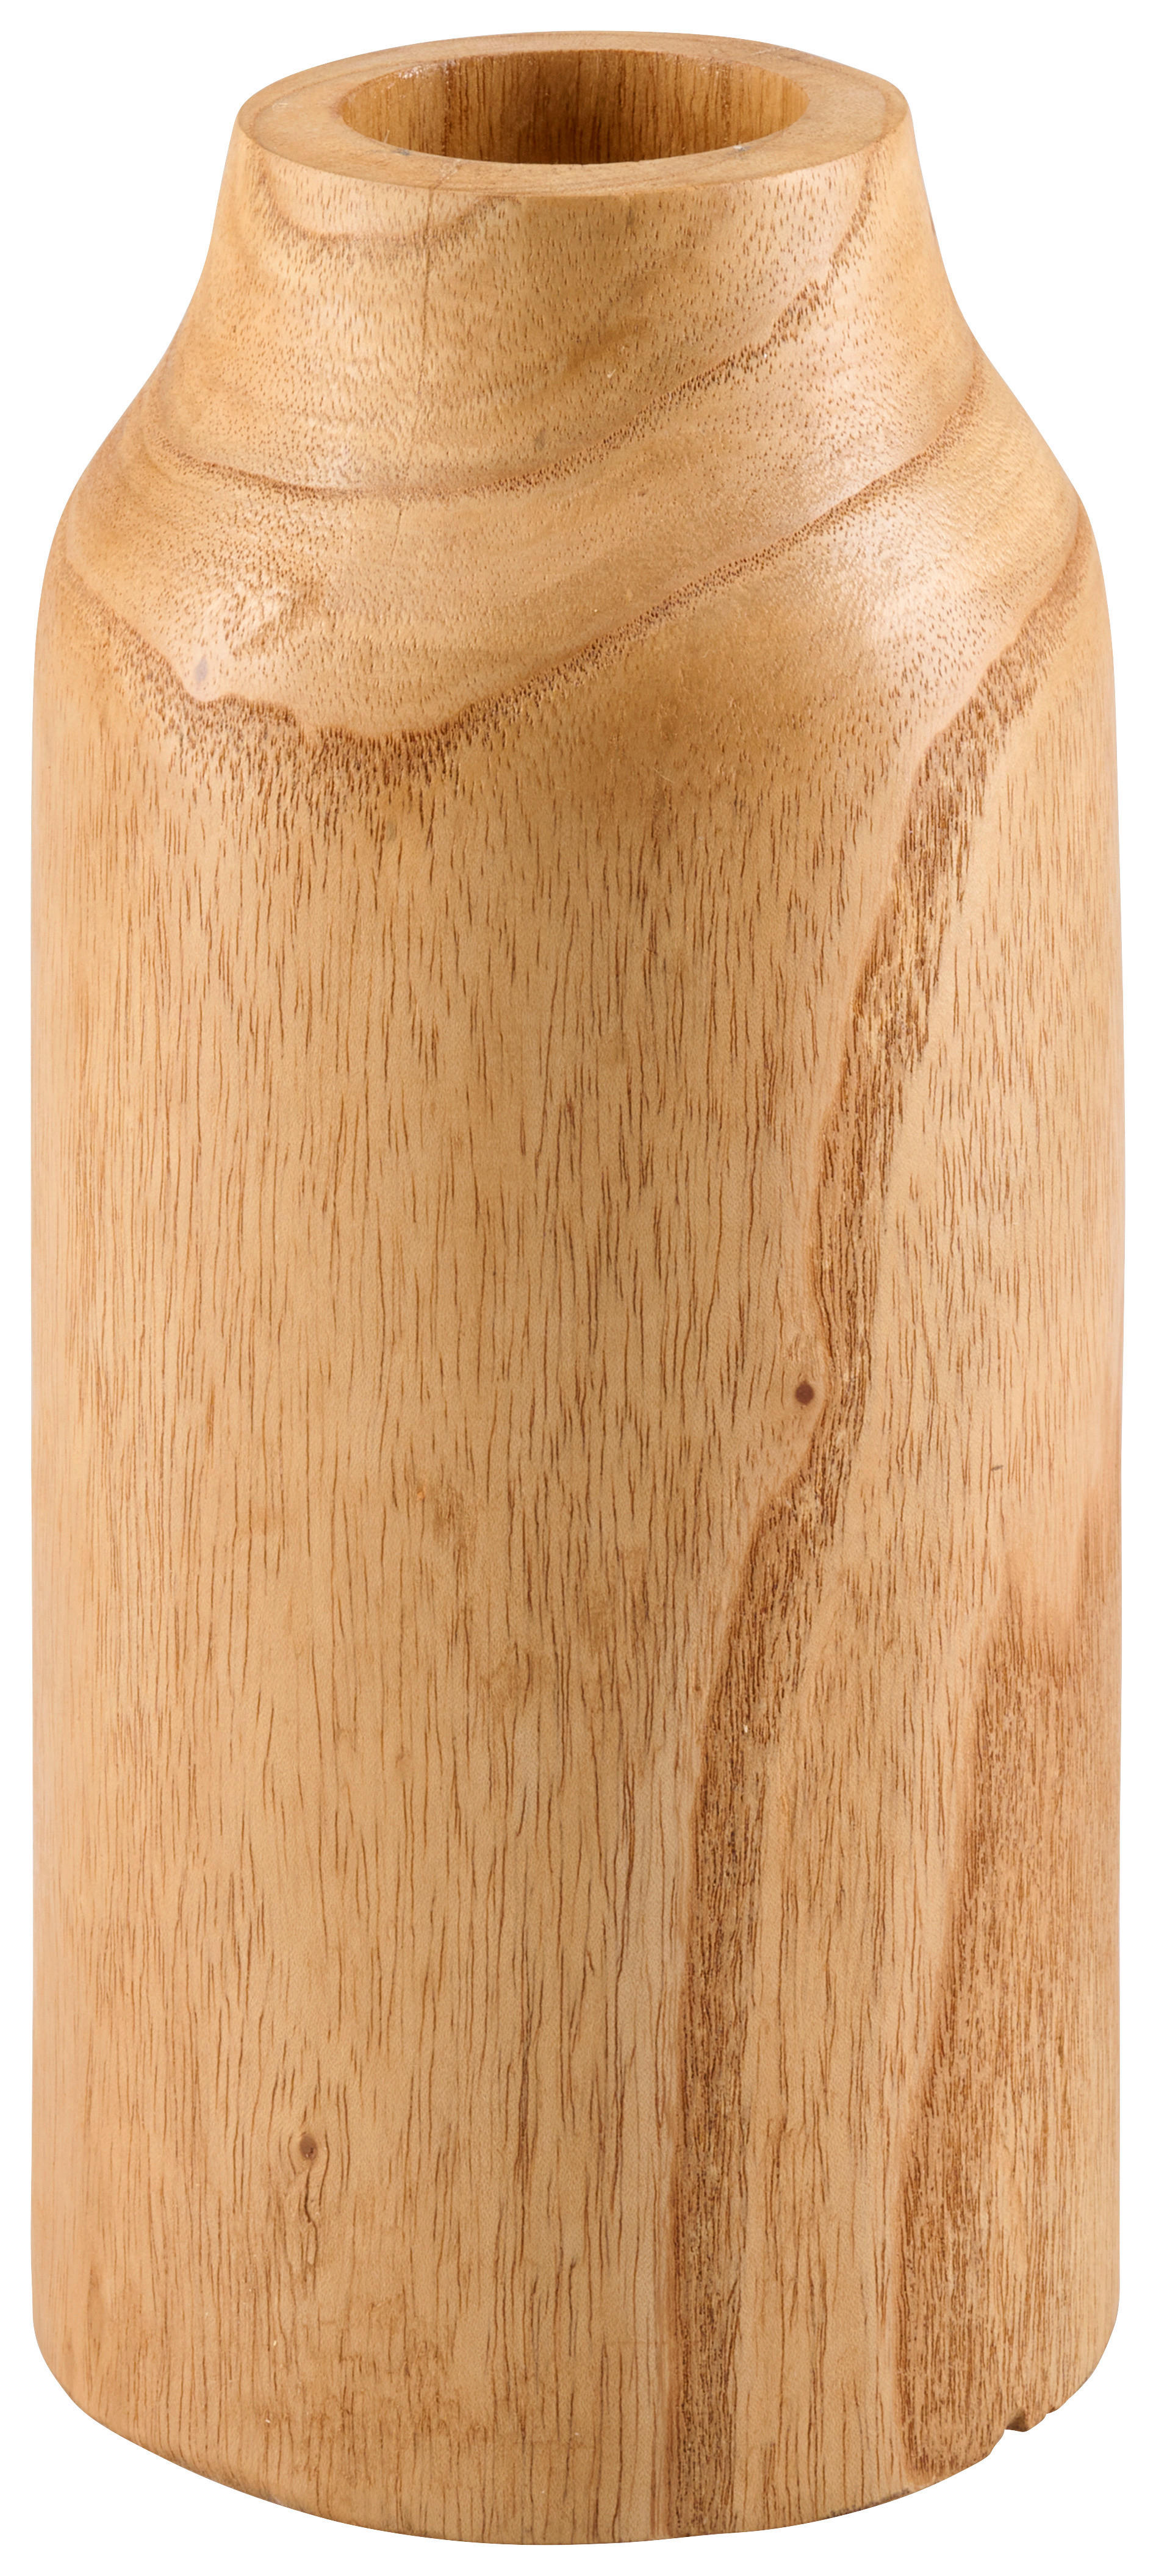 Ambia Home VÁZA, drevo, plast, 25 cm